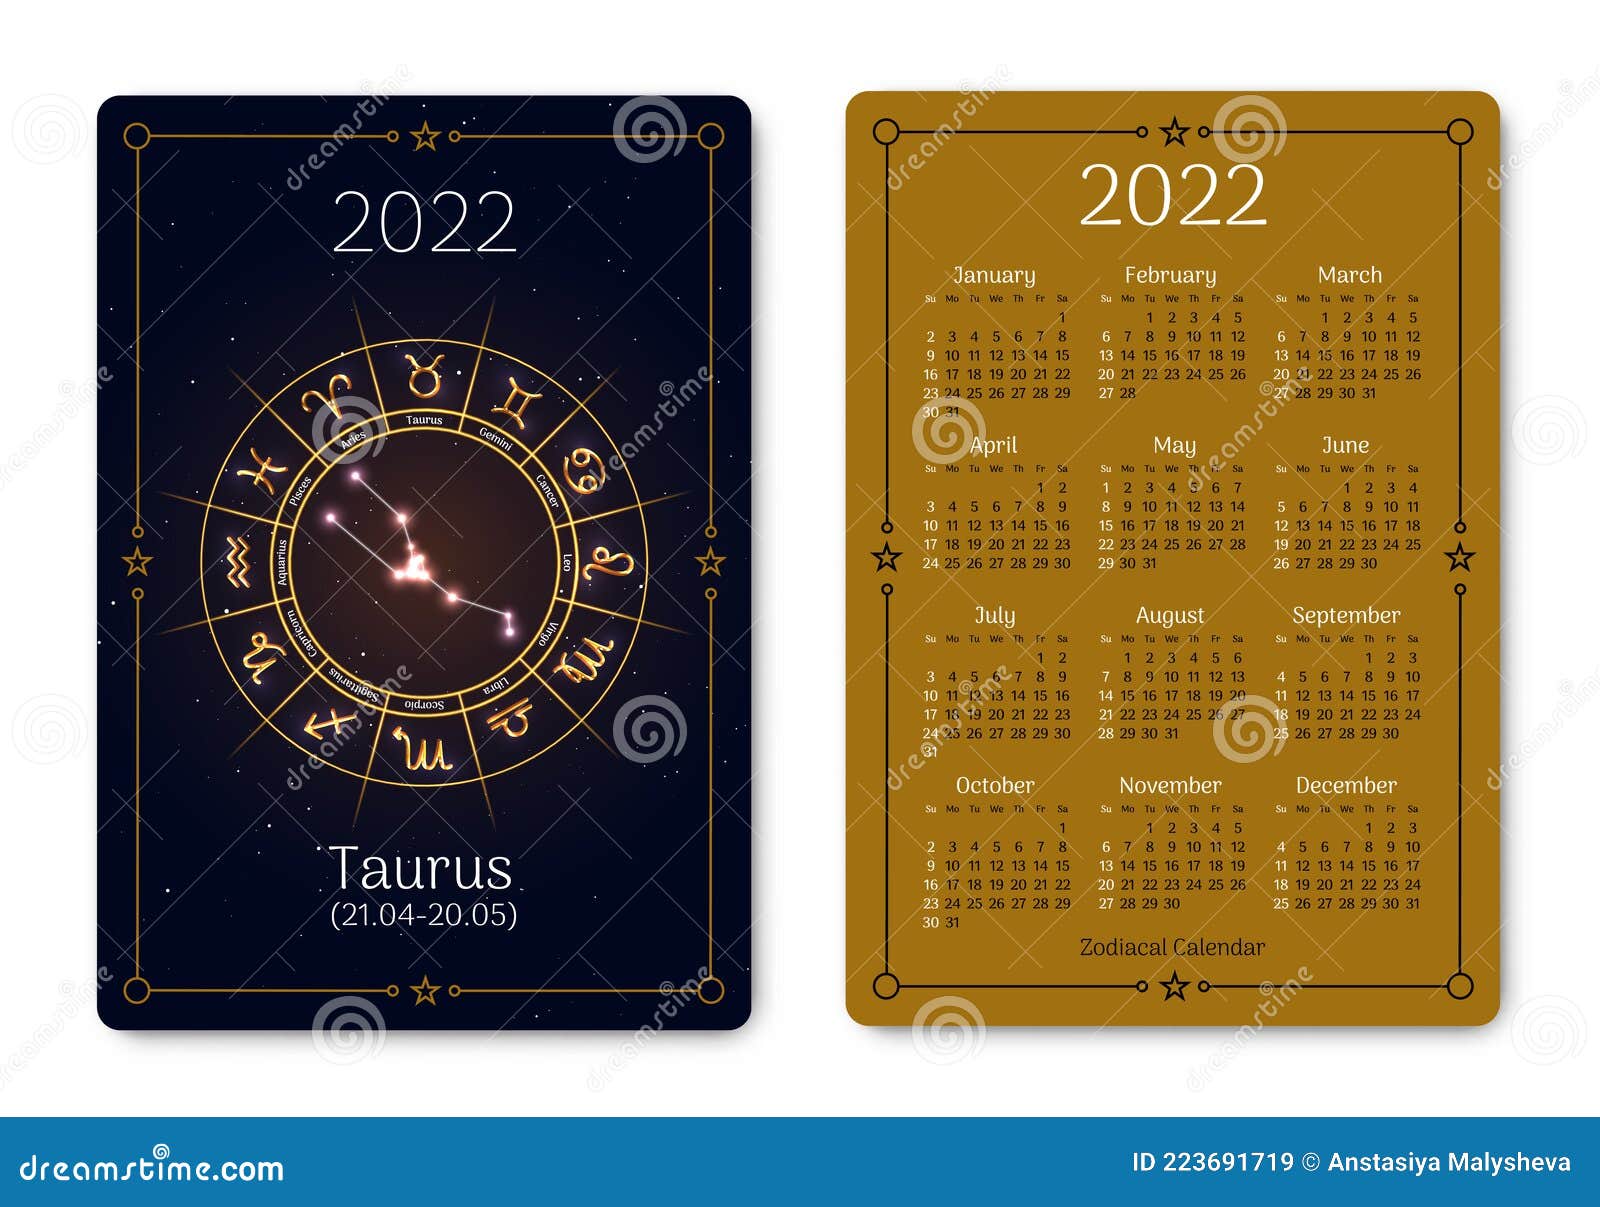 Taurus Calendar Of Pocket Size Layout Zodiac Sign Stock Vector Illustration Of Double February 223691719